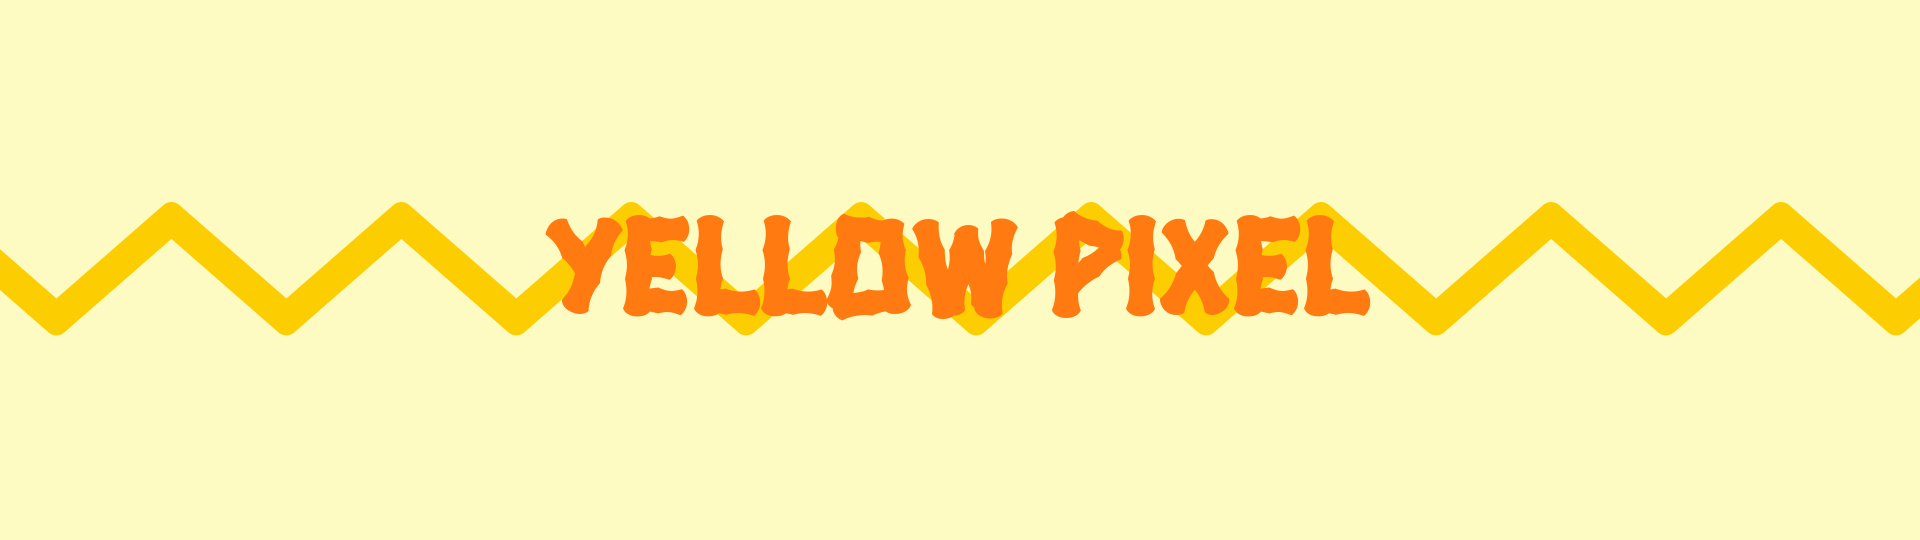 Yellow Pixel 32x32 Tiles